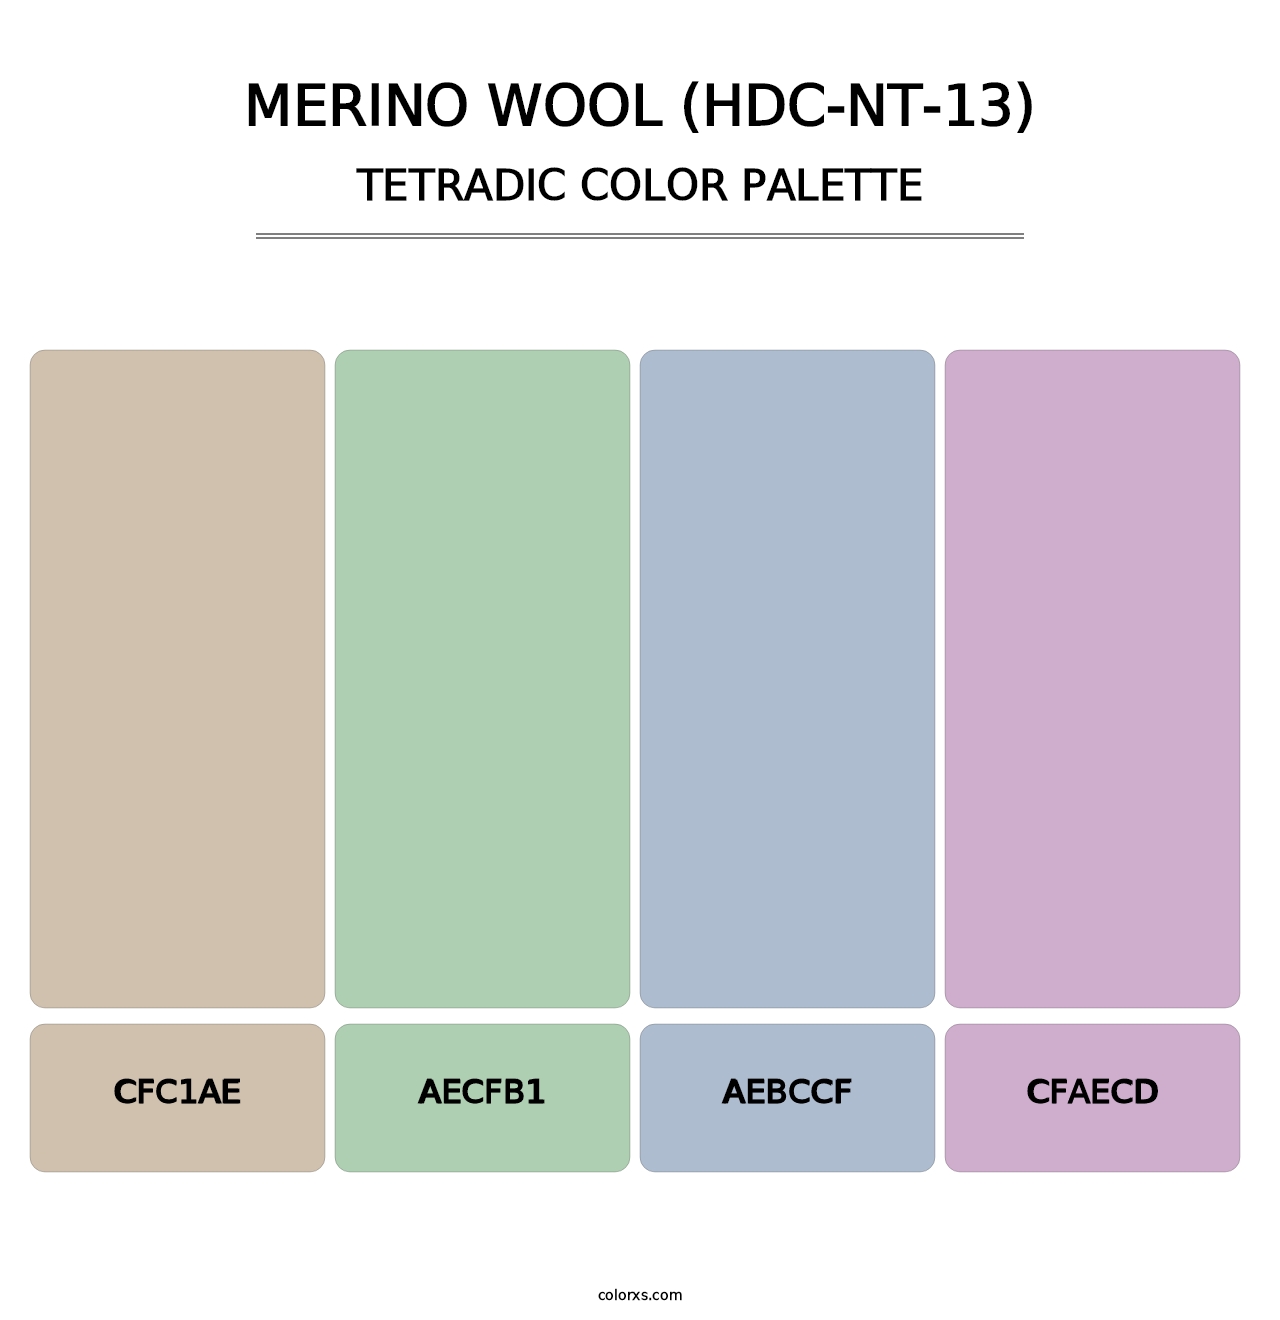 Merino Wool (HDC-NT-13) - Tetradic Color Palette